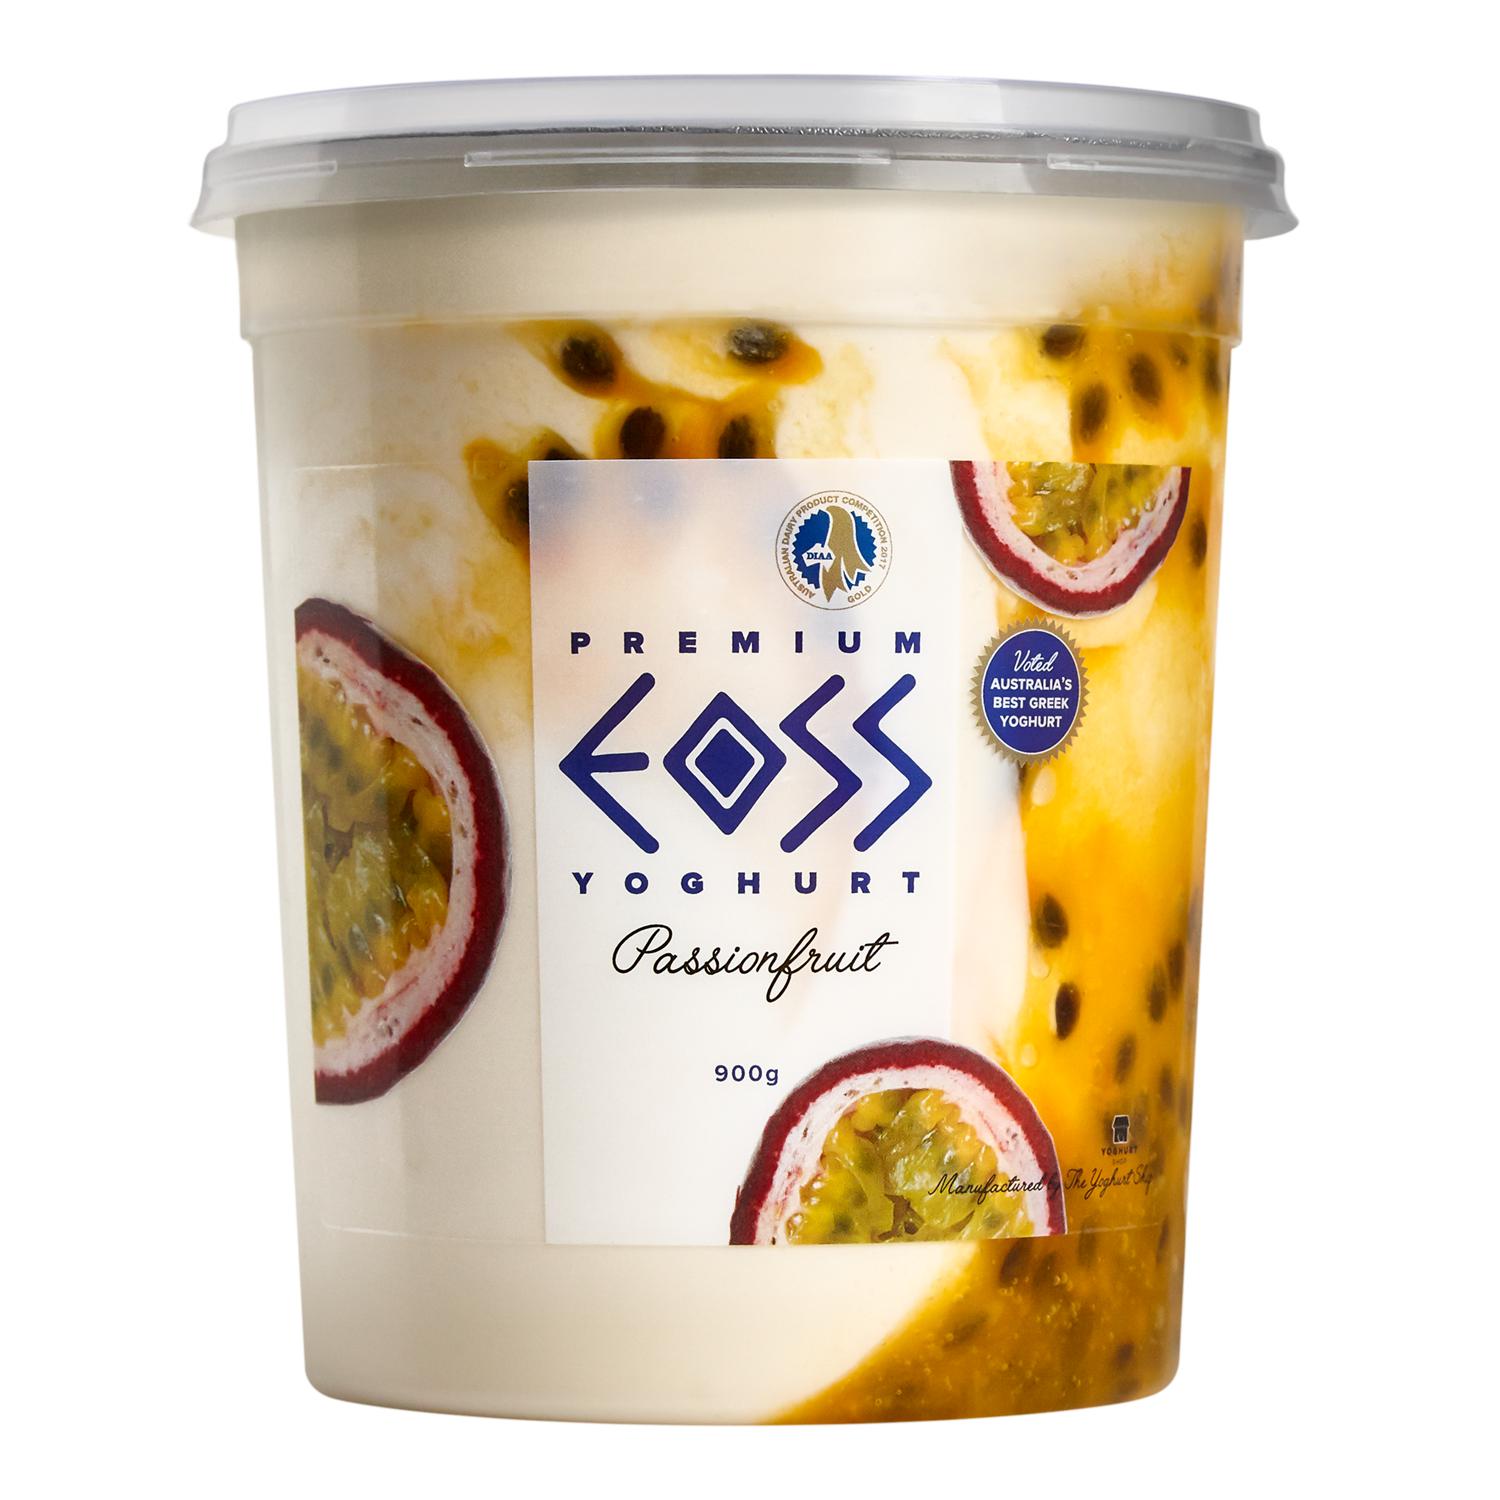 EOSS Yoghurt Passionfruit Tub 900g